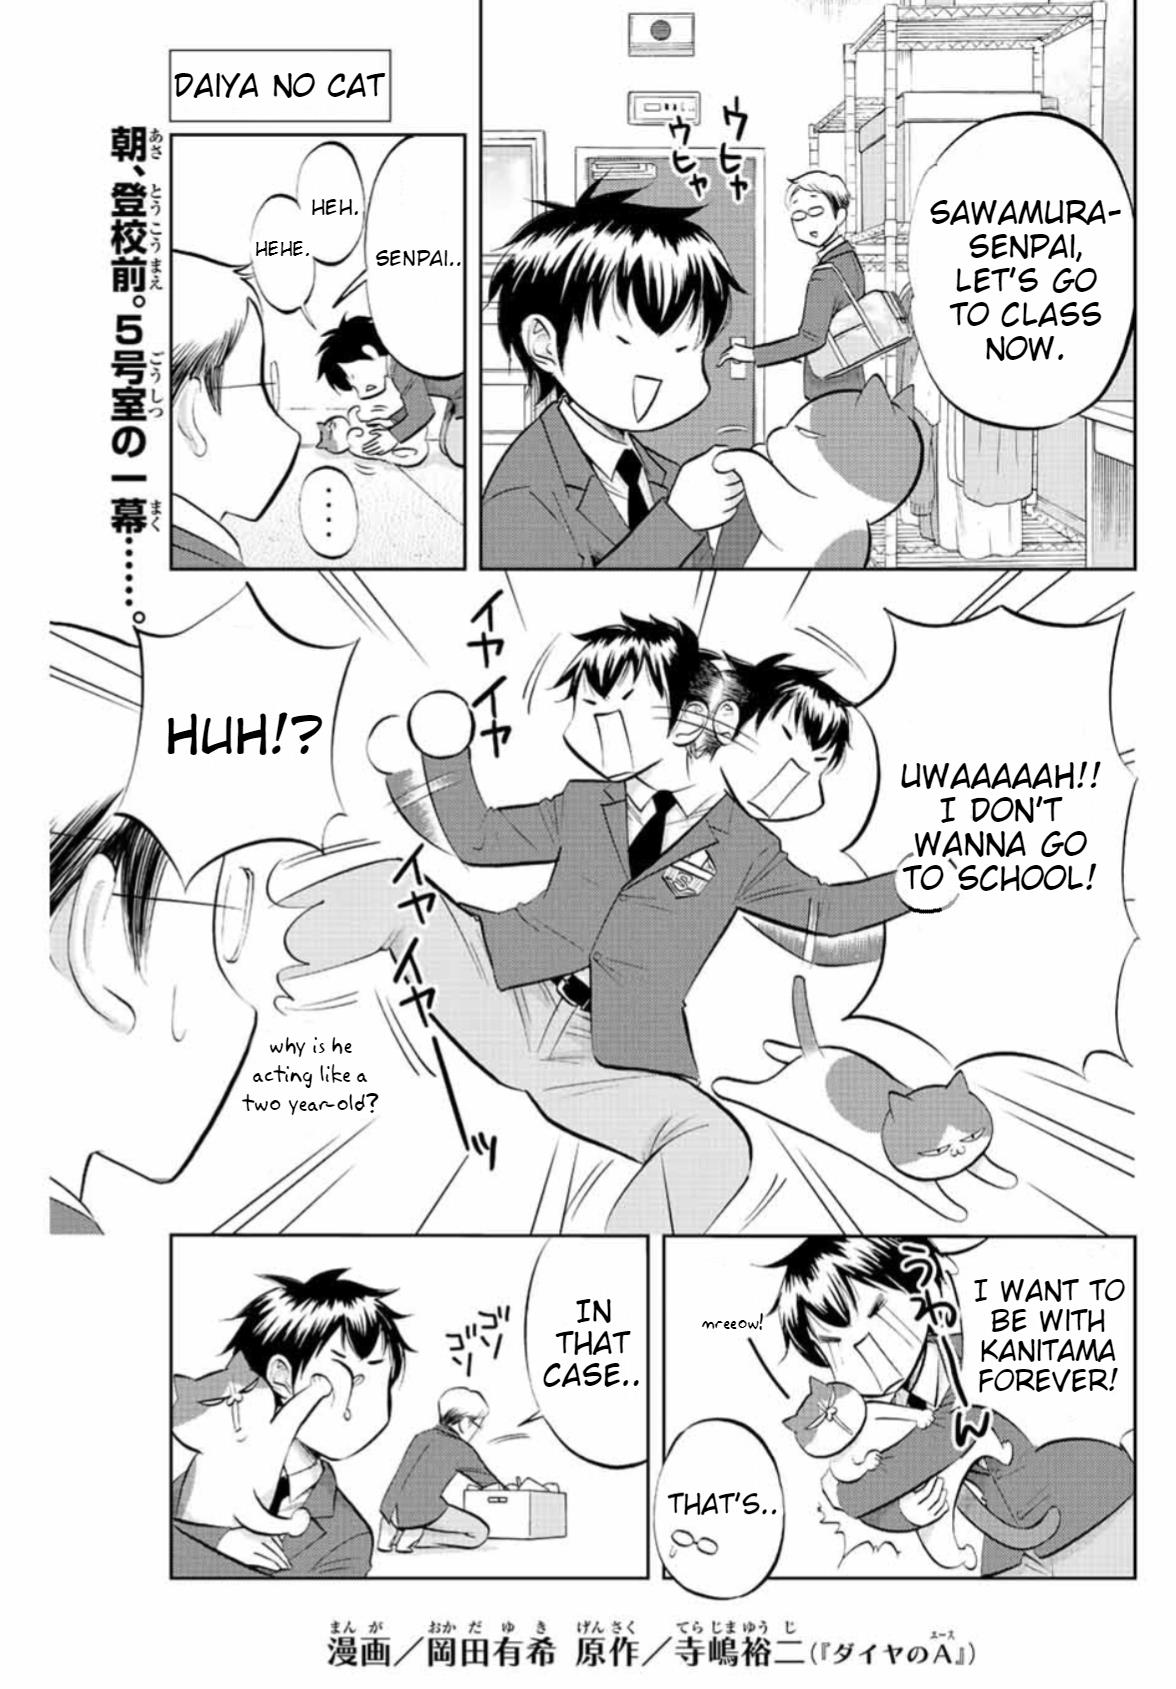 Daiya No C - Page 1